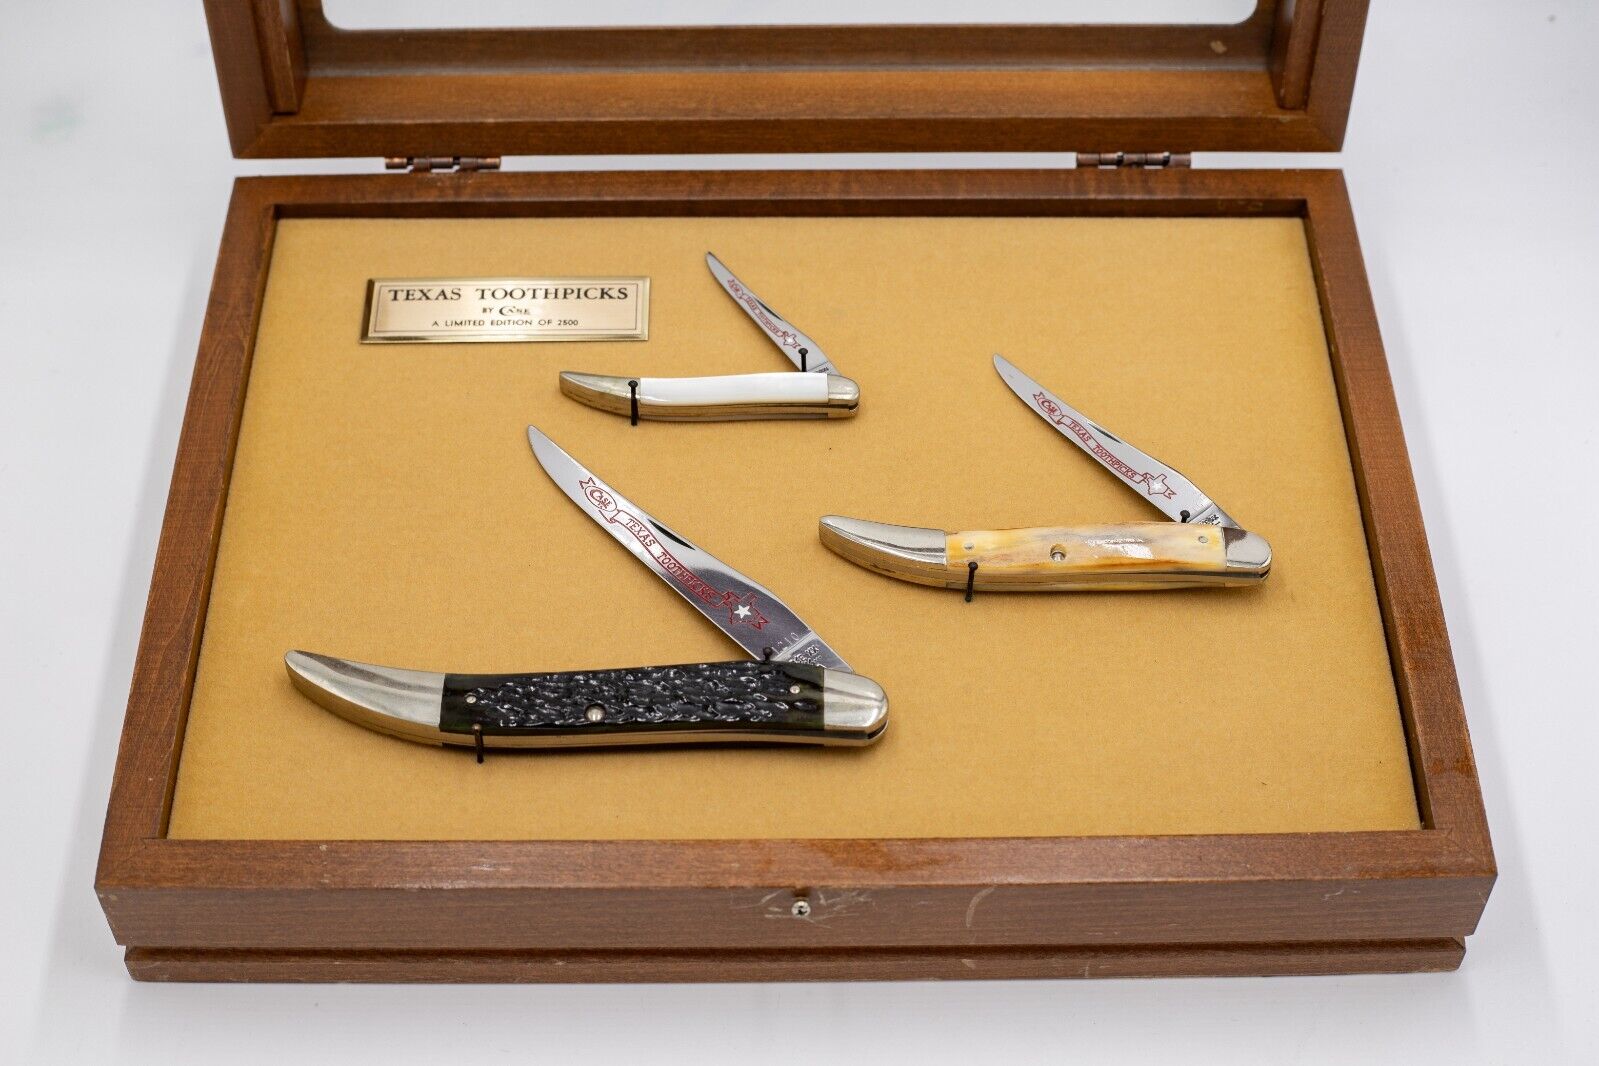 Rare Case XX 1984 Texas Toothpicks Set - 3pc Knife Set w/ Display - 1 of 2500